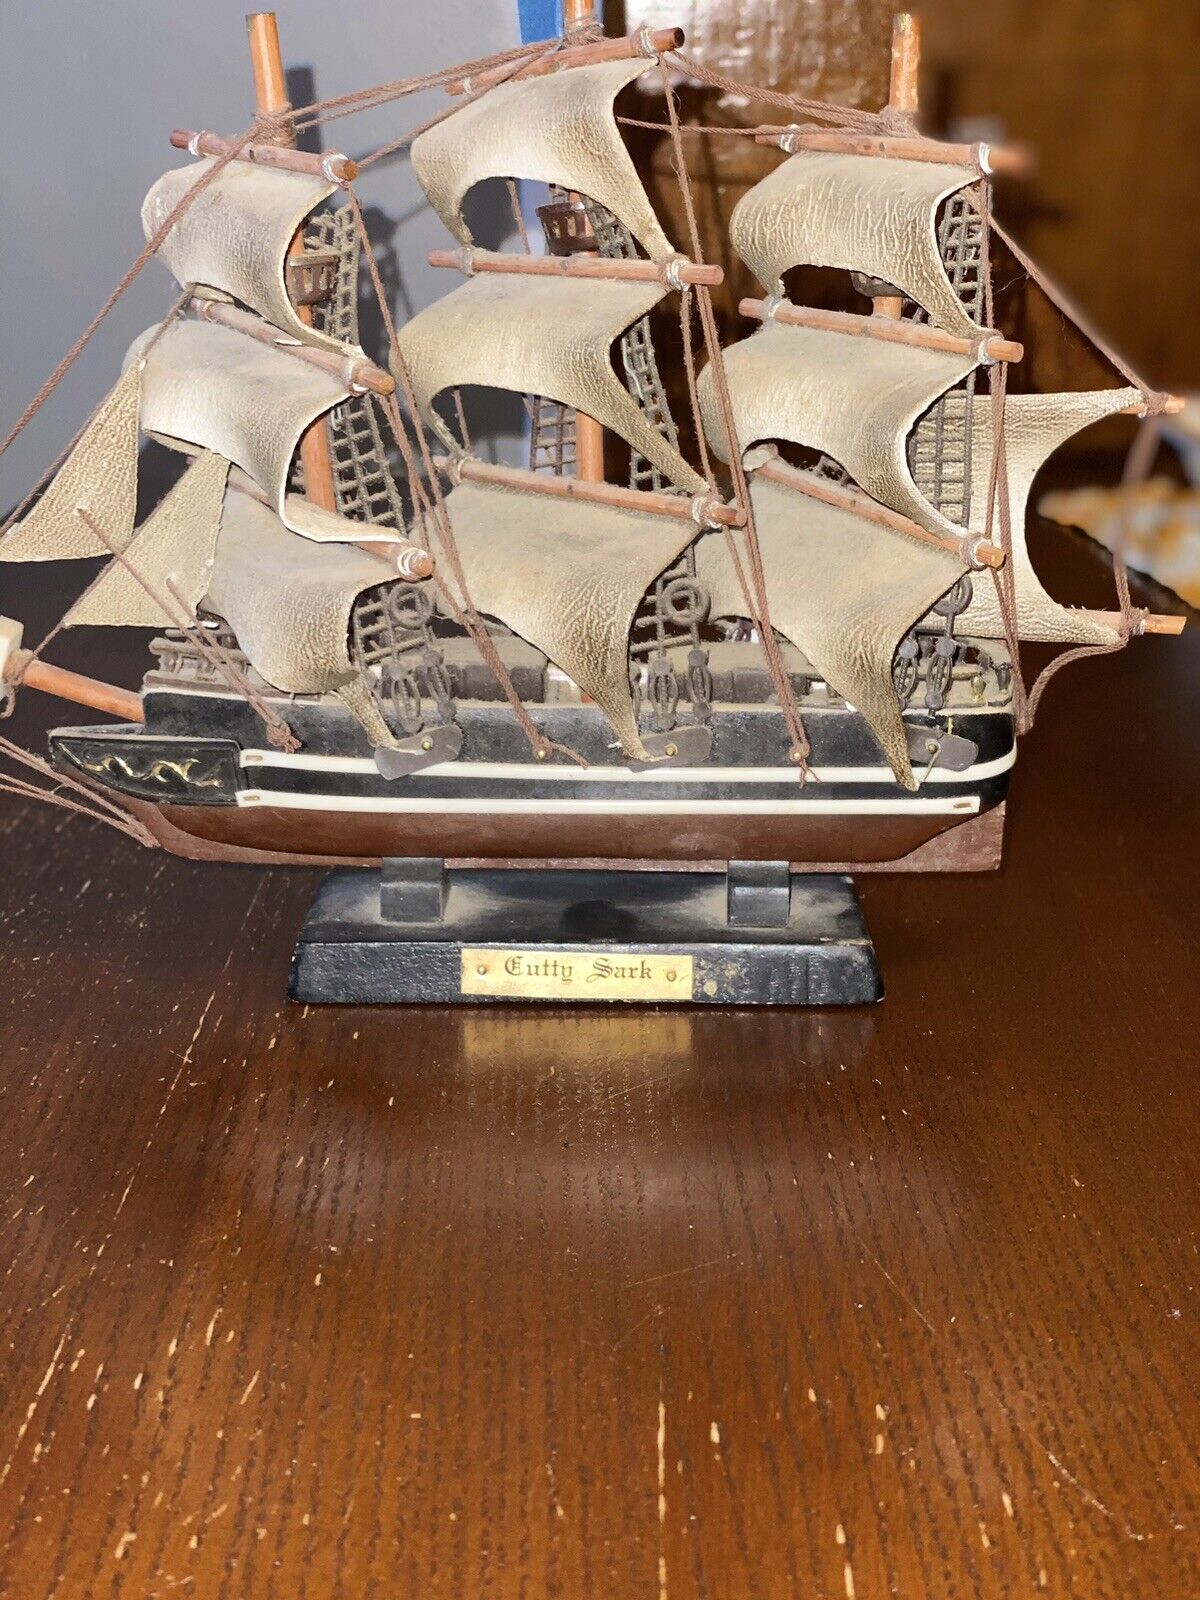 Guttg Sark Pirate Ship. Vintage Asbury Park New Jersey